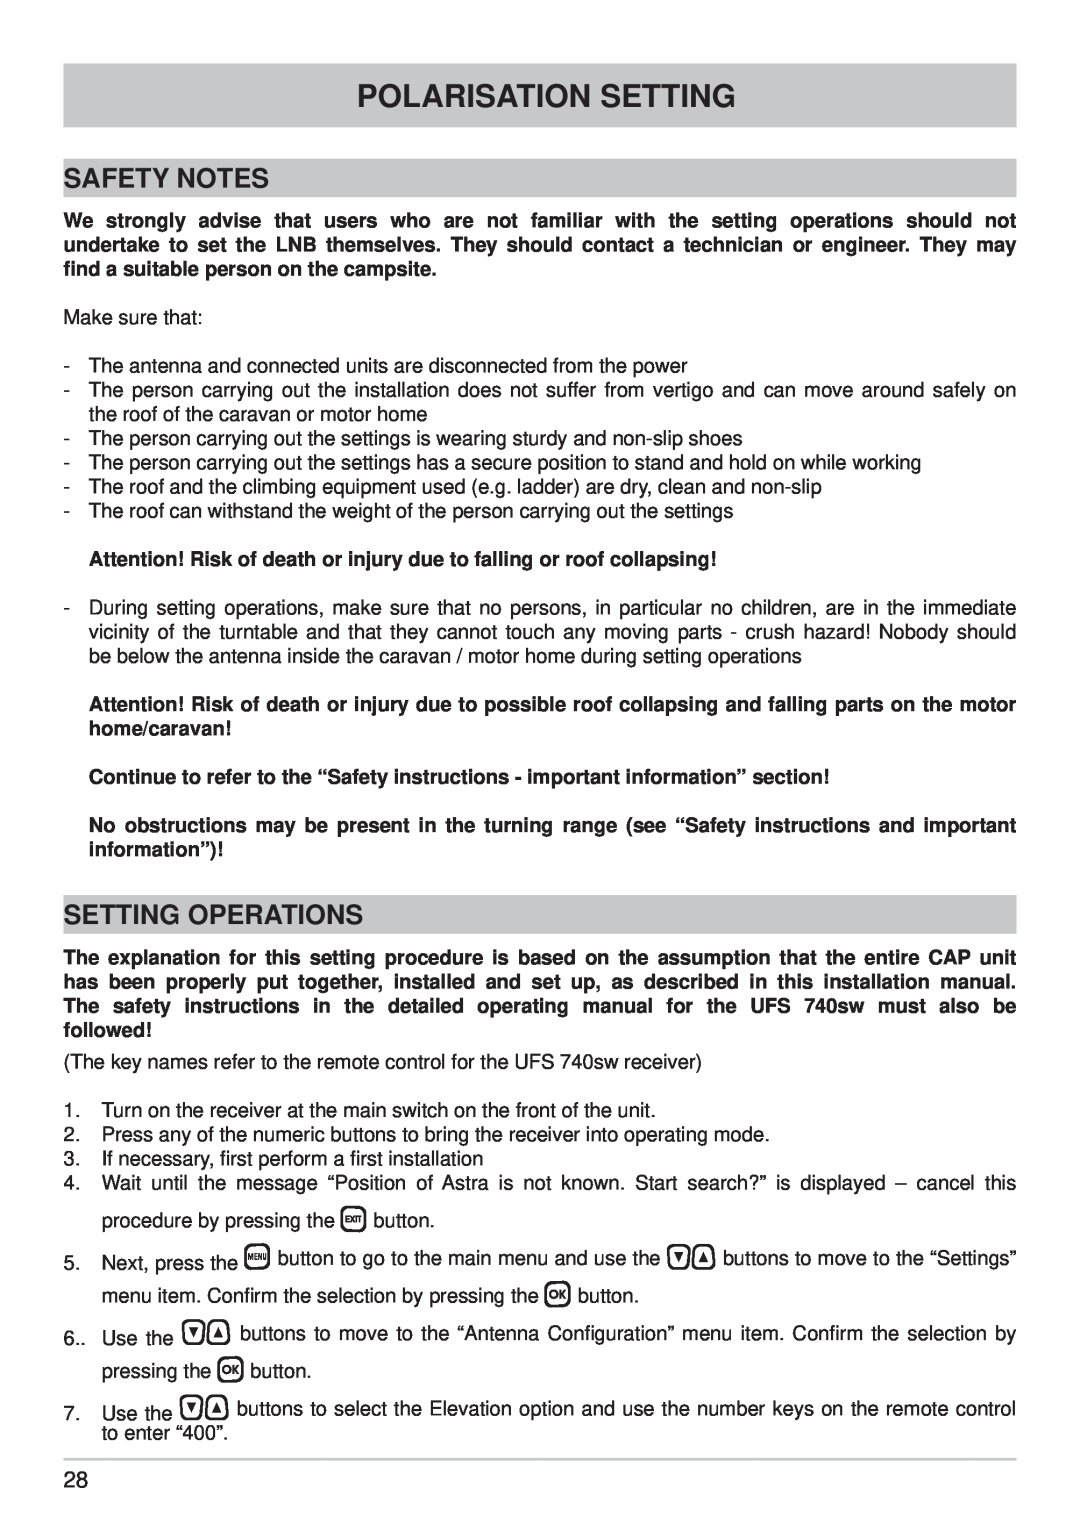 Kathrein CAP 700 manual Polarisation Setting, Safety Notes, Setting Operations 